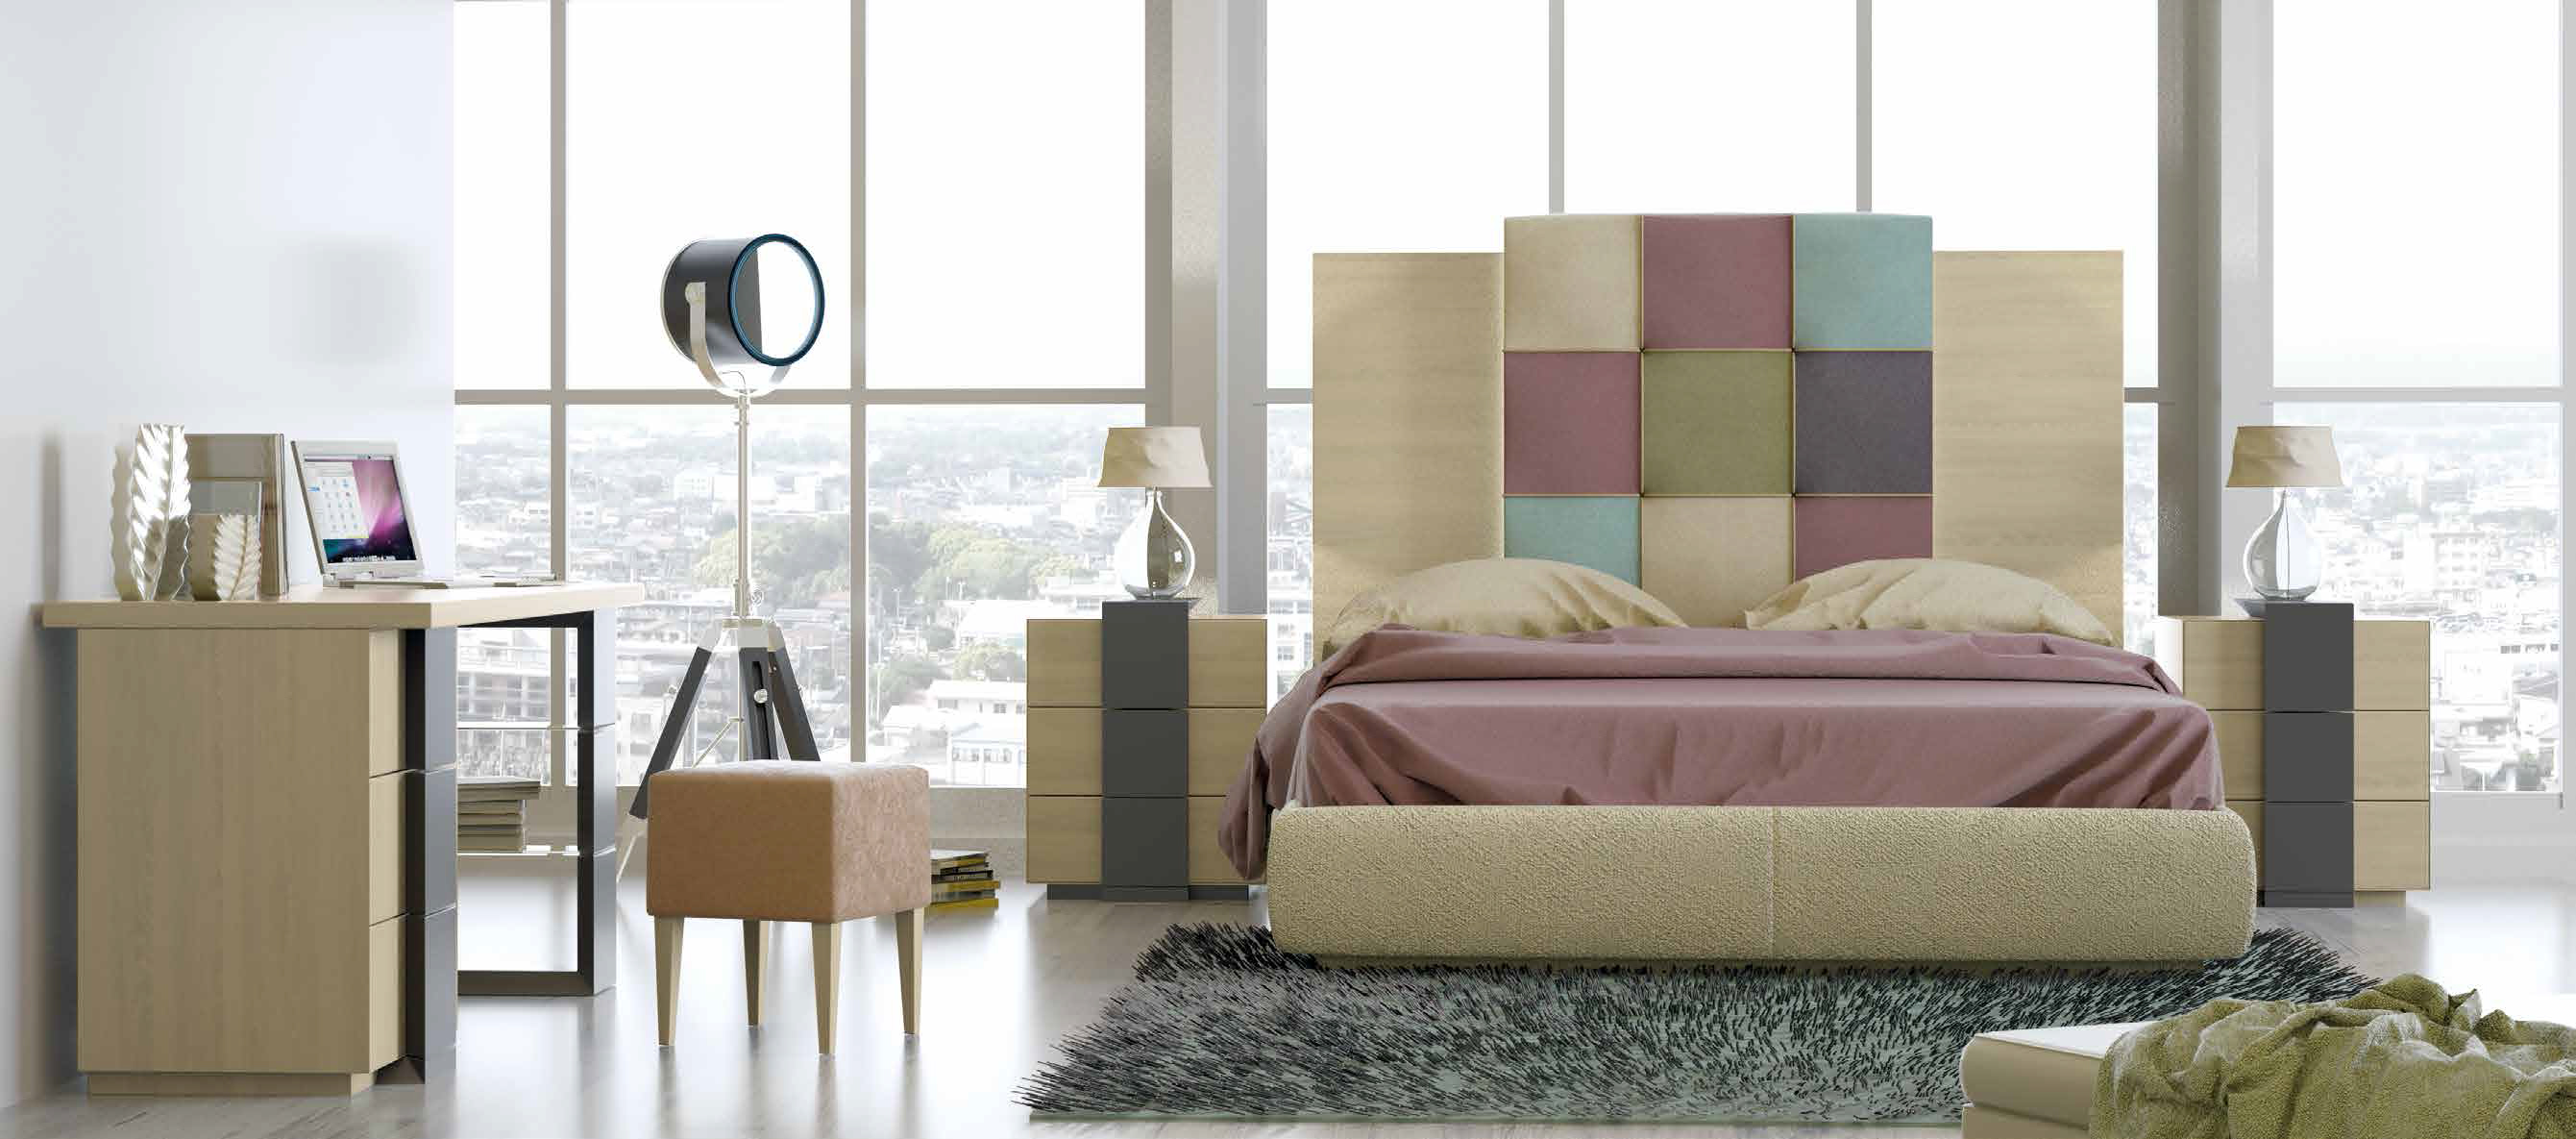 Brands Franco Furniture Bedrooms vol2, Spain DOR 12